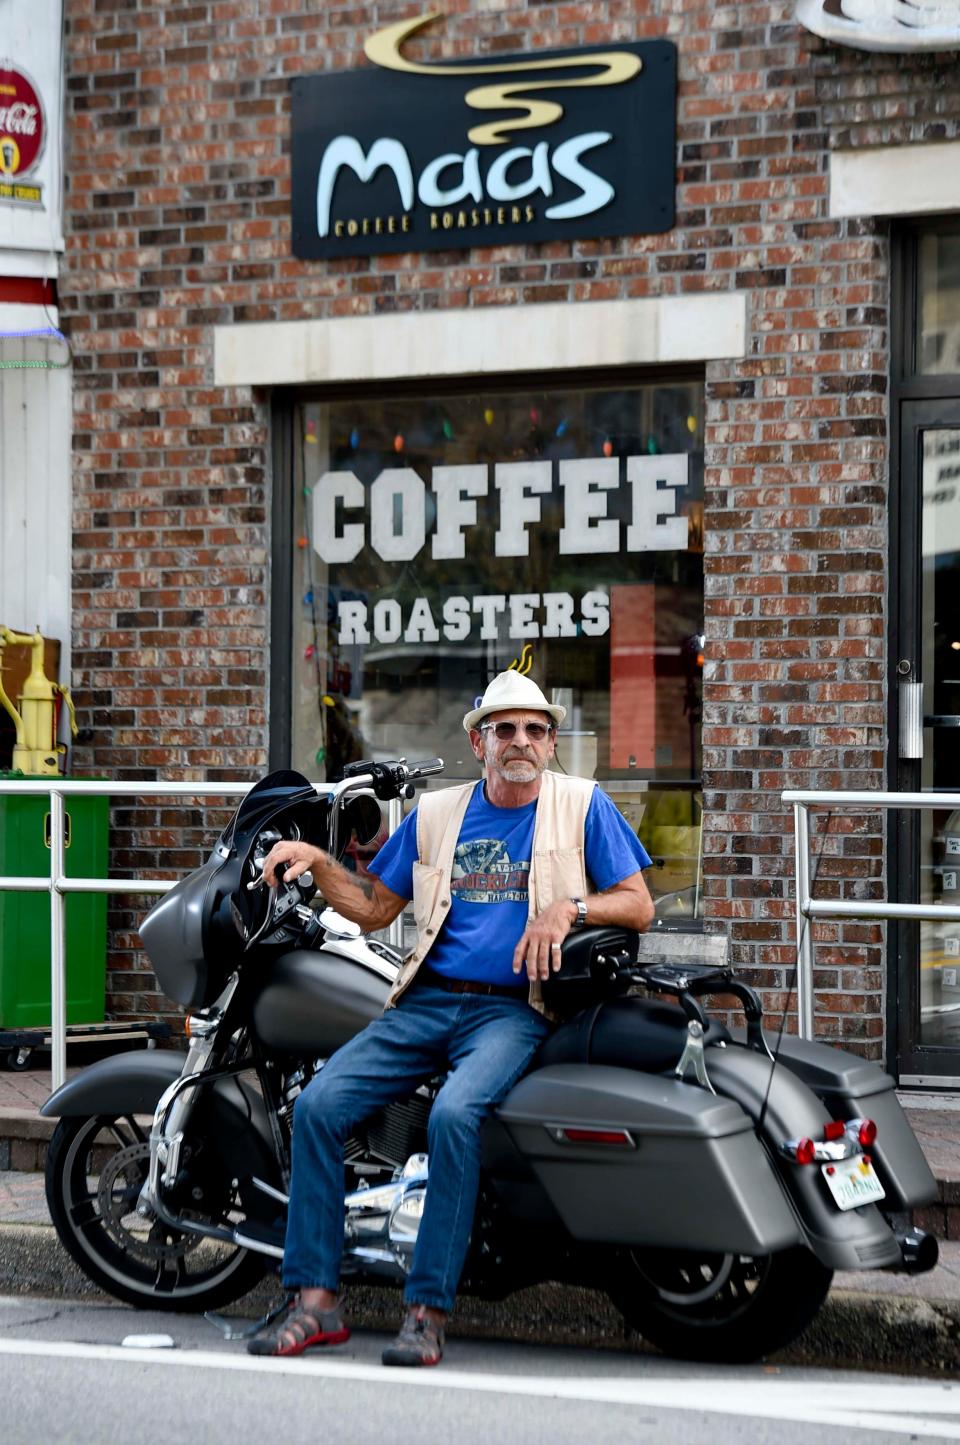 When he's not working, Jim Maas of Maas Coffee Roasters enjoys spending time on his Harley-Davidson Street Glide motorcycle.